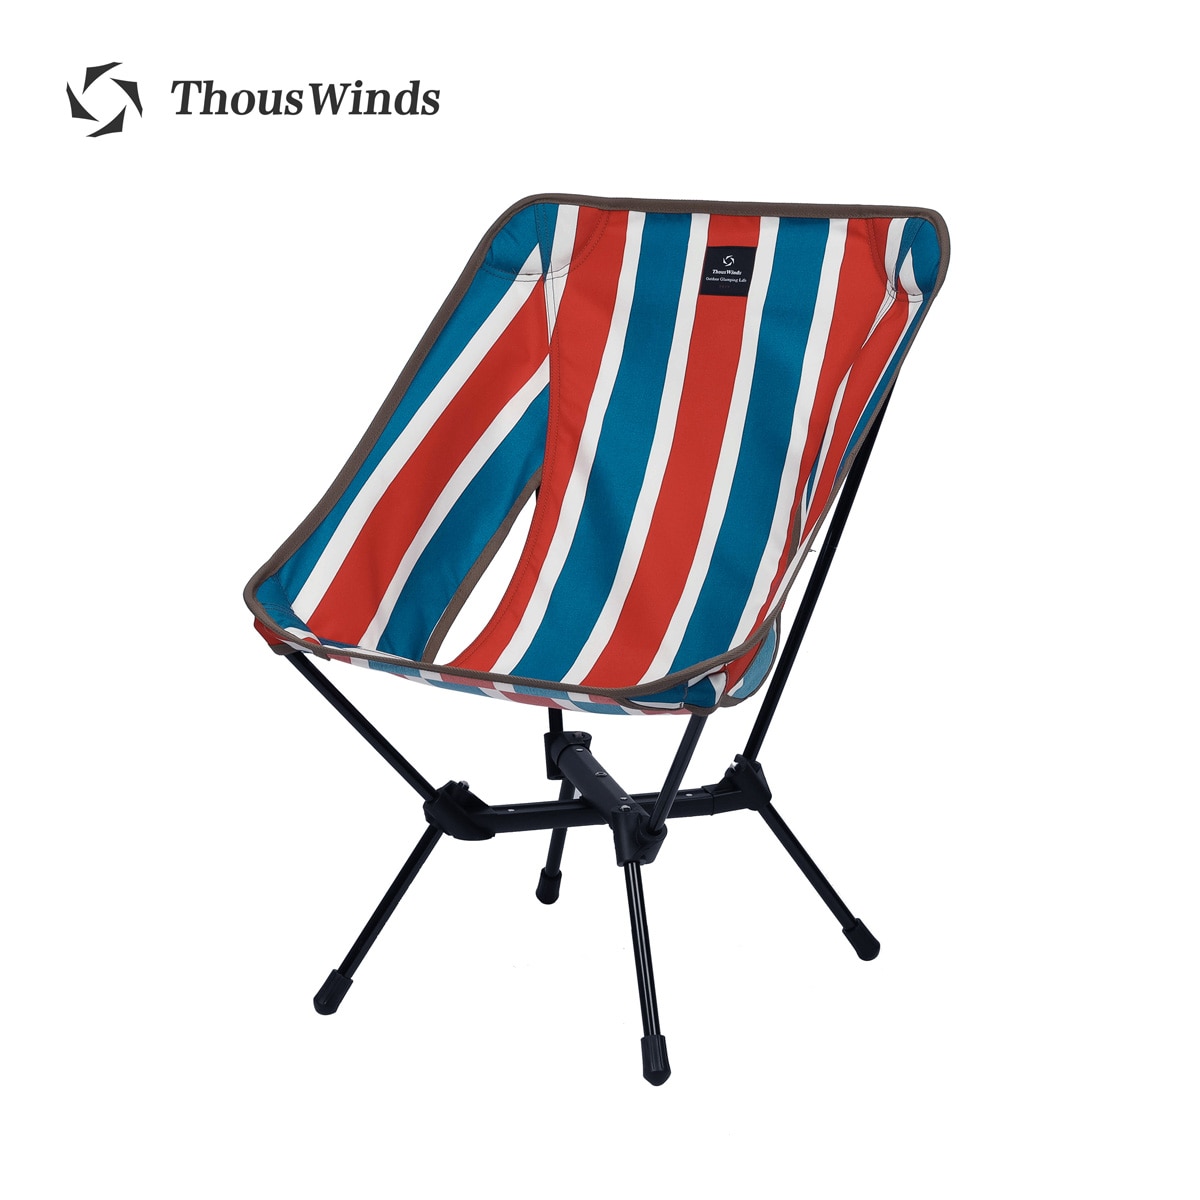 Thous Winds-야외 접이식 캠핑 낚시 의자 초경량 편안한 하이킹 의자, 적재 용량 160kg, 보관 가방 포함